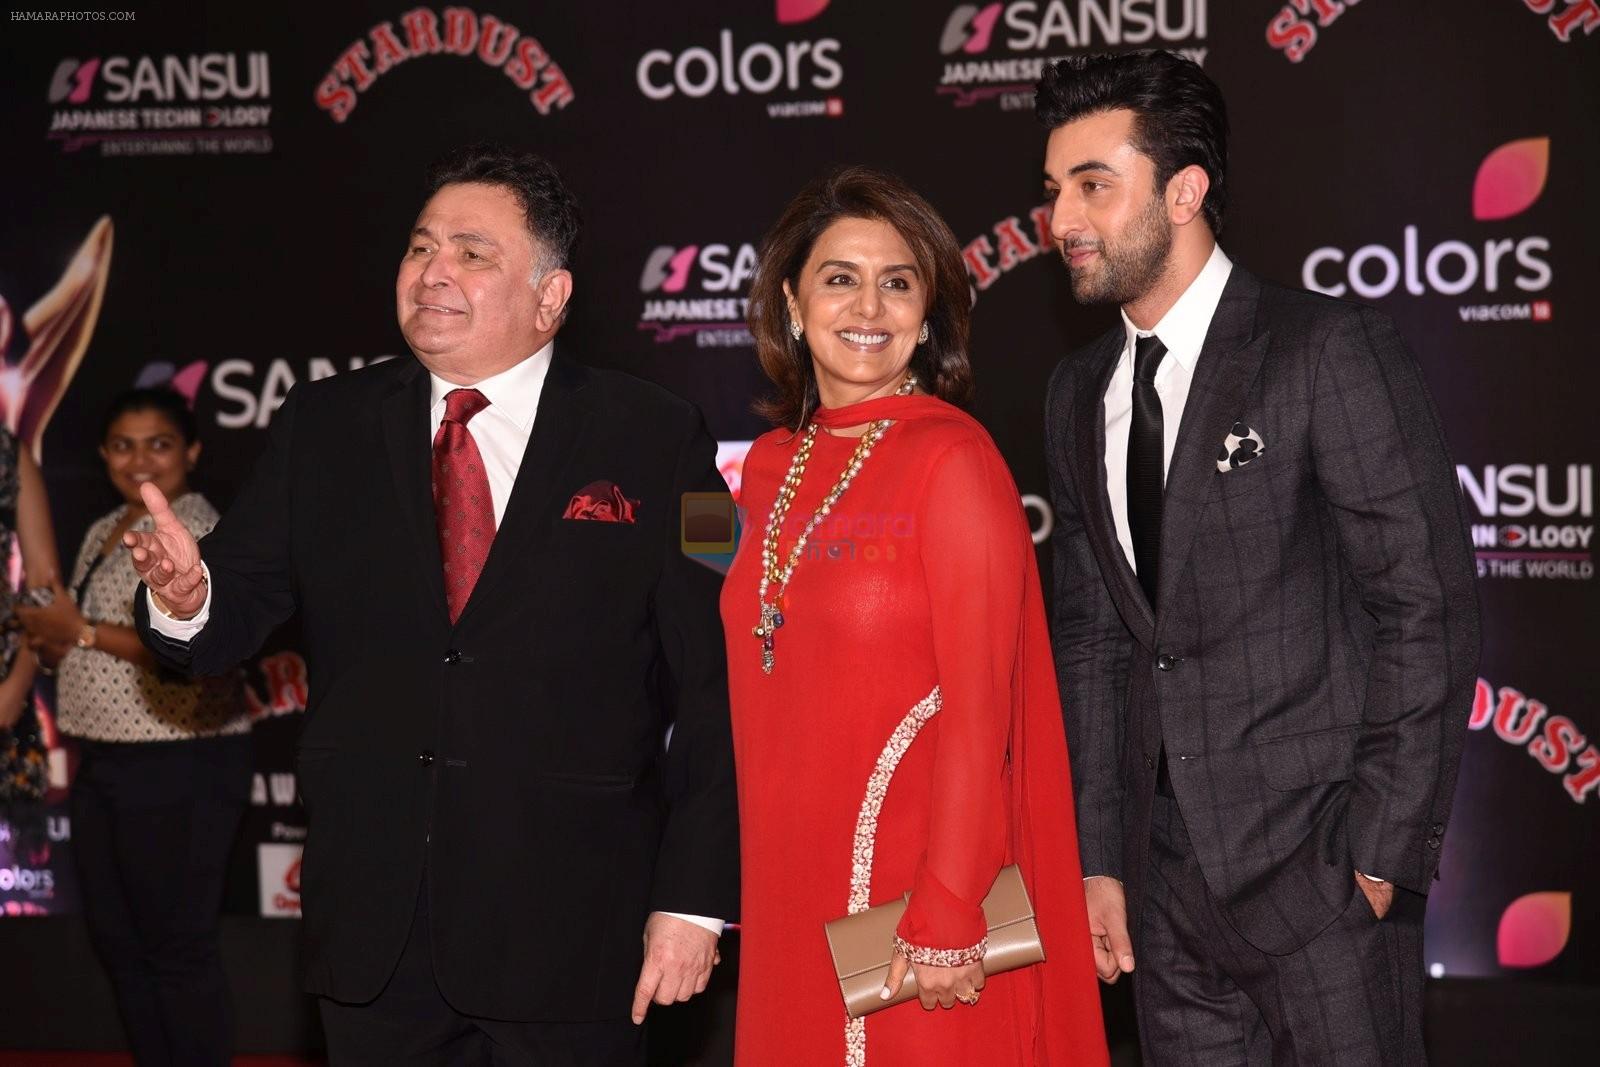 Rishi Kapoor, Neetu Singh, Ranbir Kapoor at 14th Sansui COLORS Stardust Awards on 19th Dec 2016